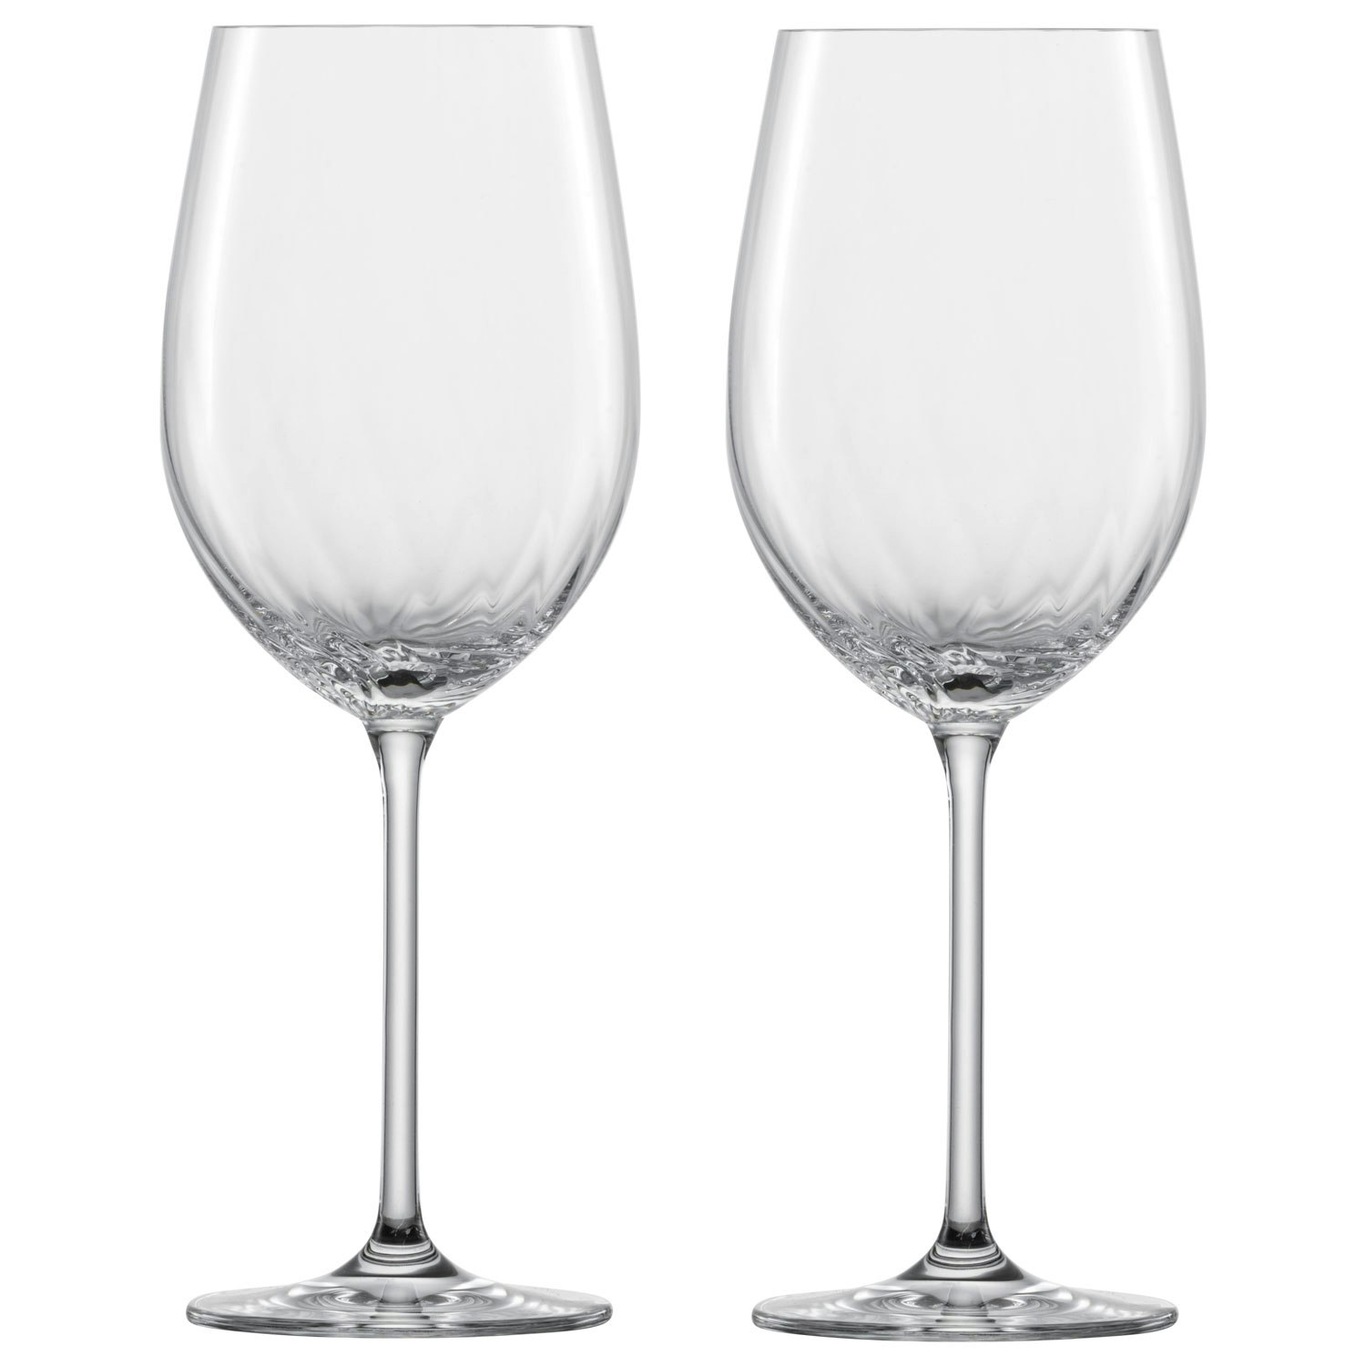 Crystal Wine Glasses - 2 Pack